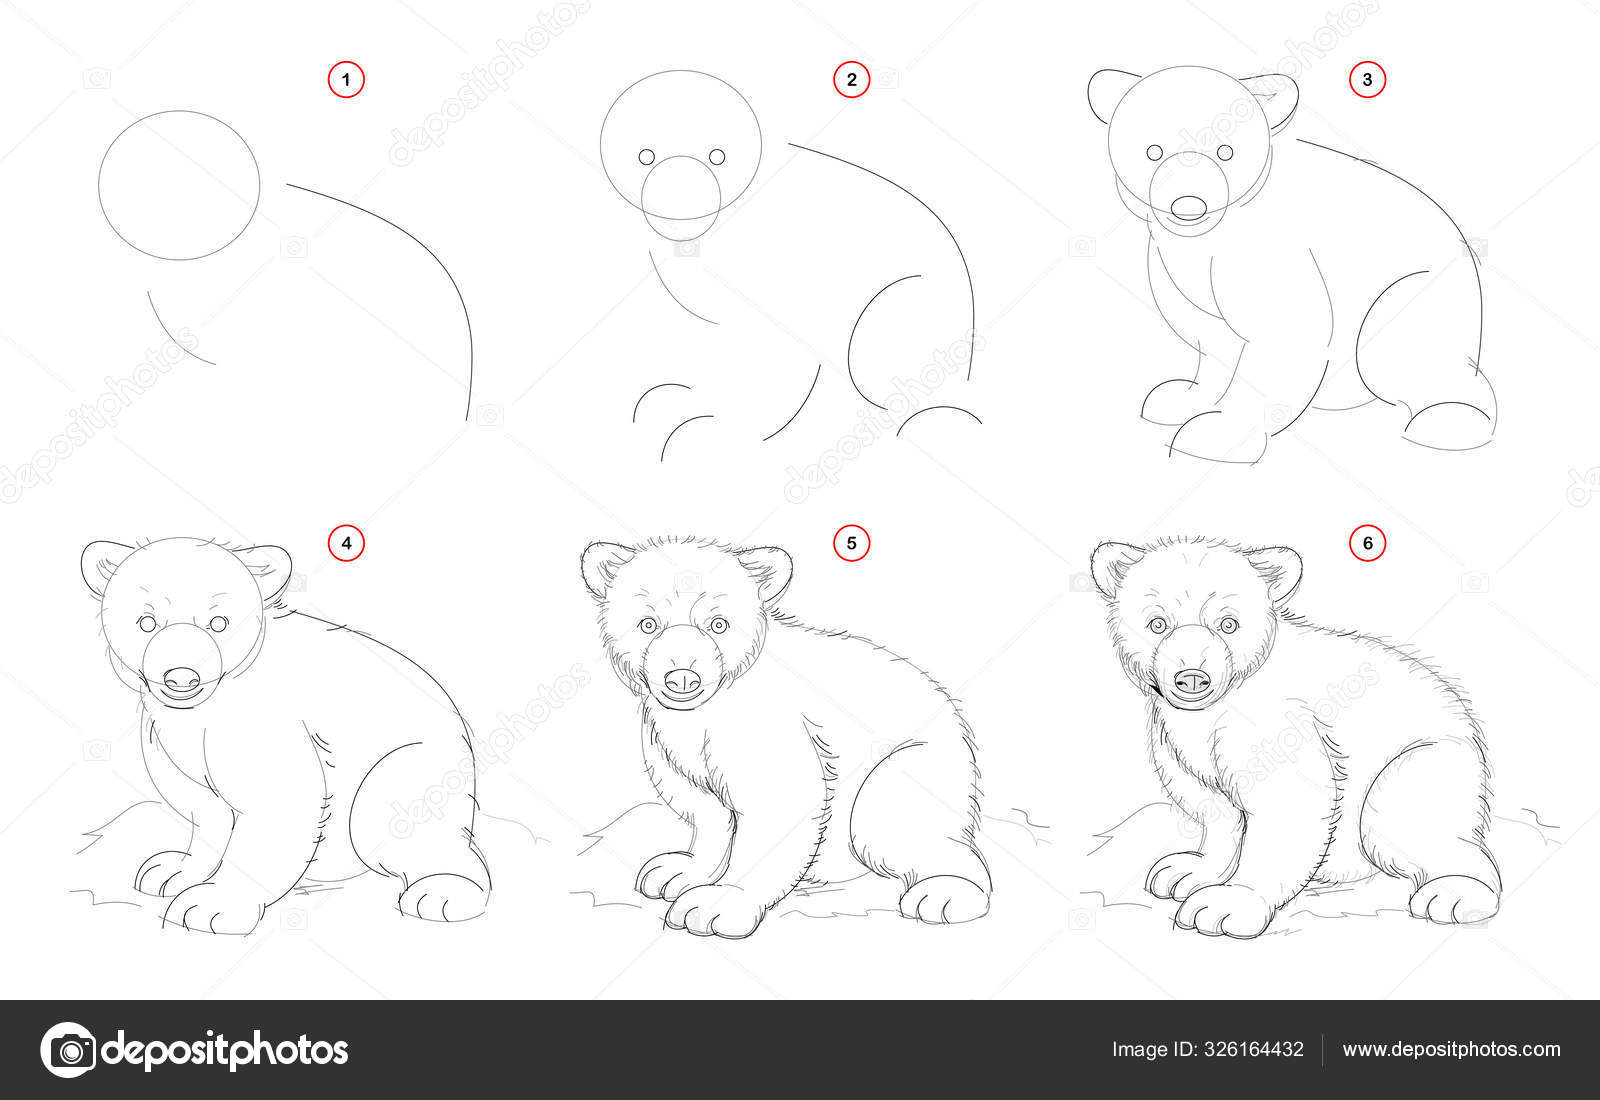 How to draw Kawaii Panda Bear l Como desenhar Urso panda Kawaii - Drawing  to Draw 